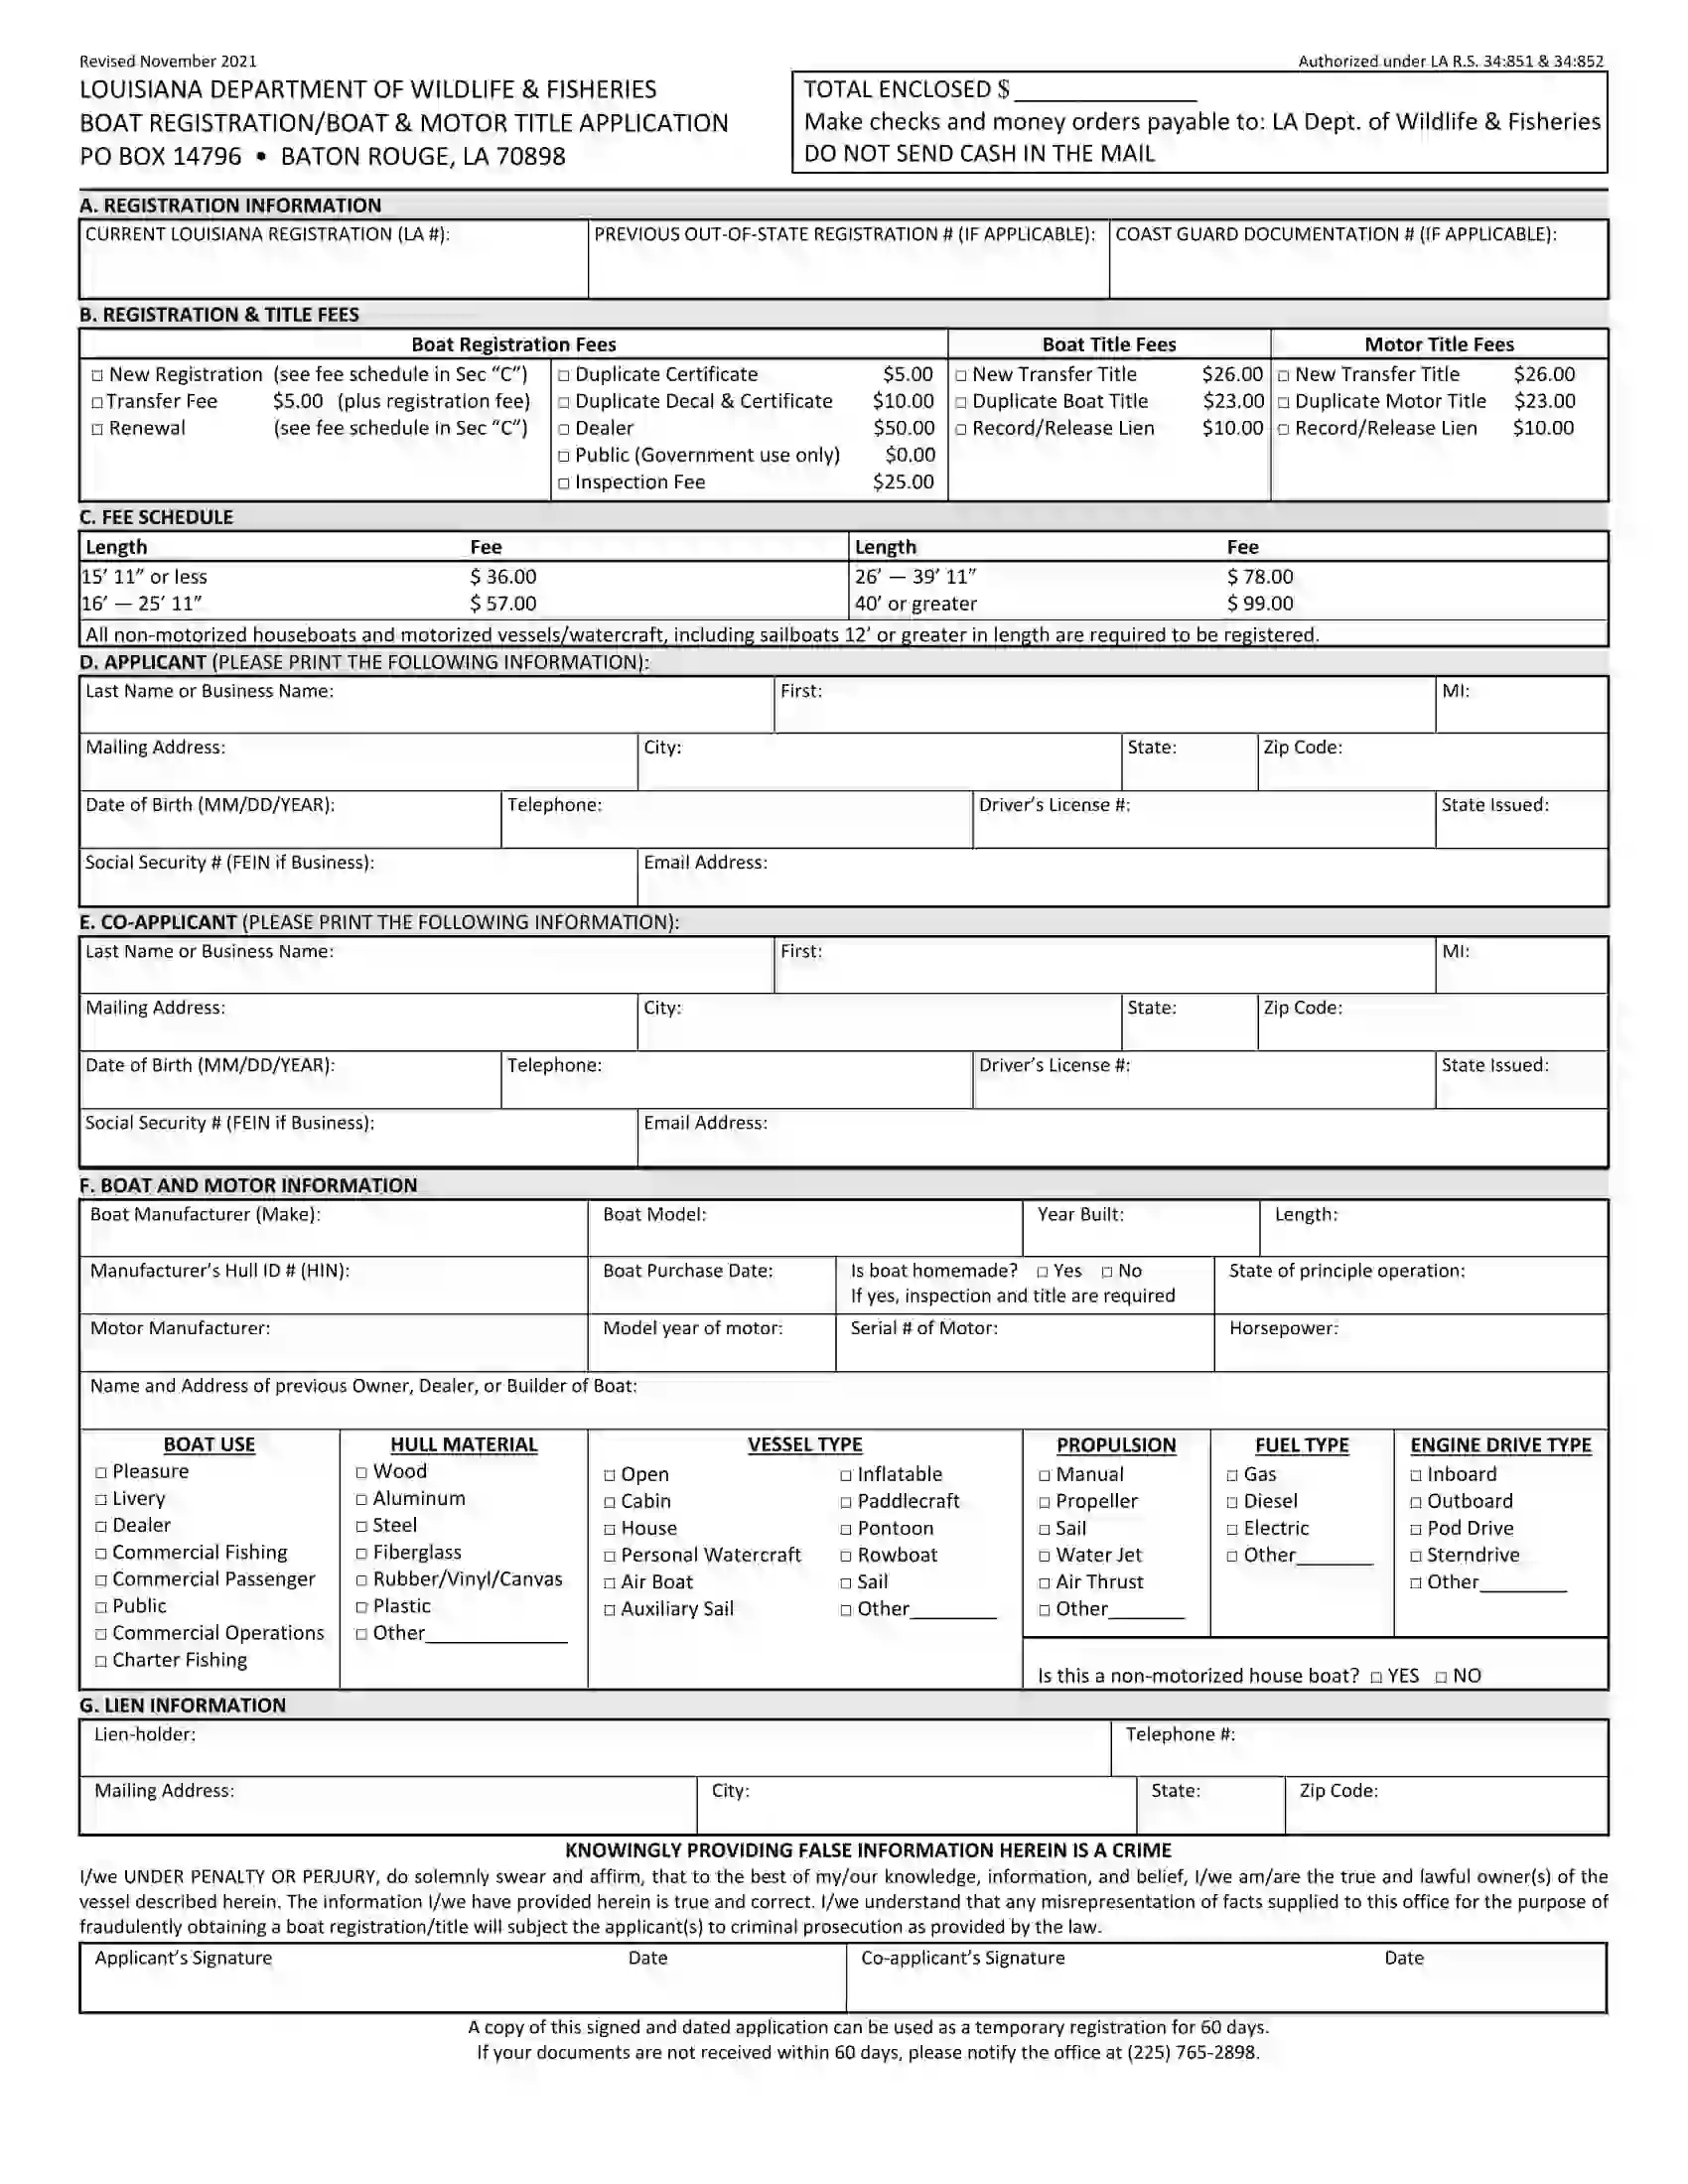 (Vessel) Boat Registration and Title Application